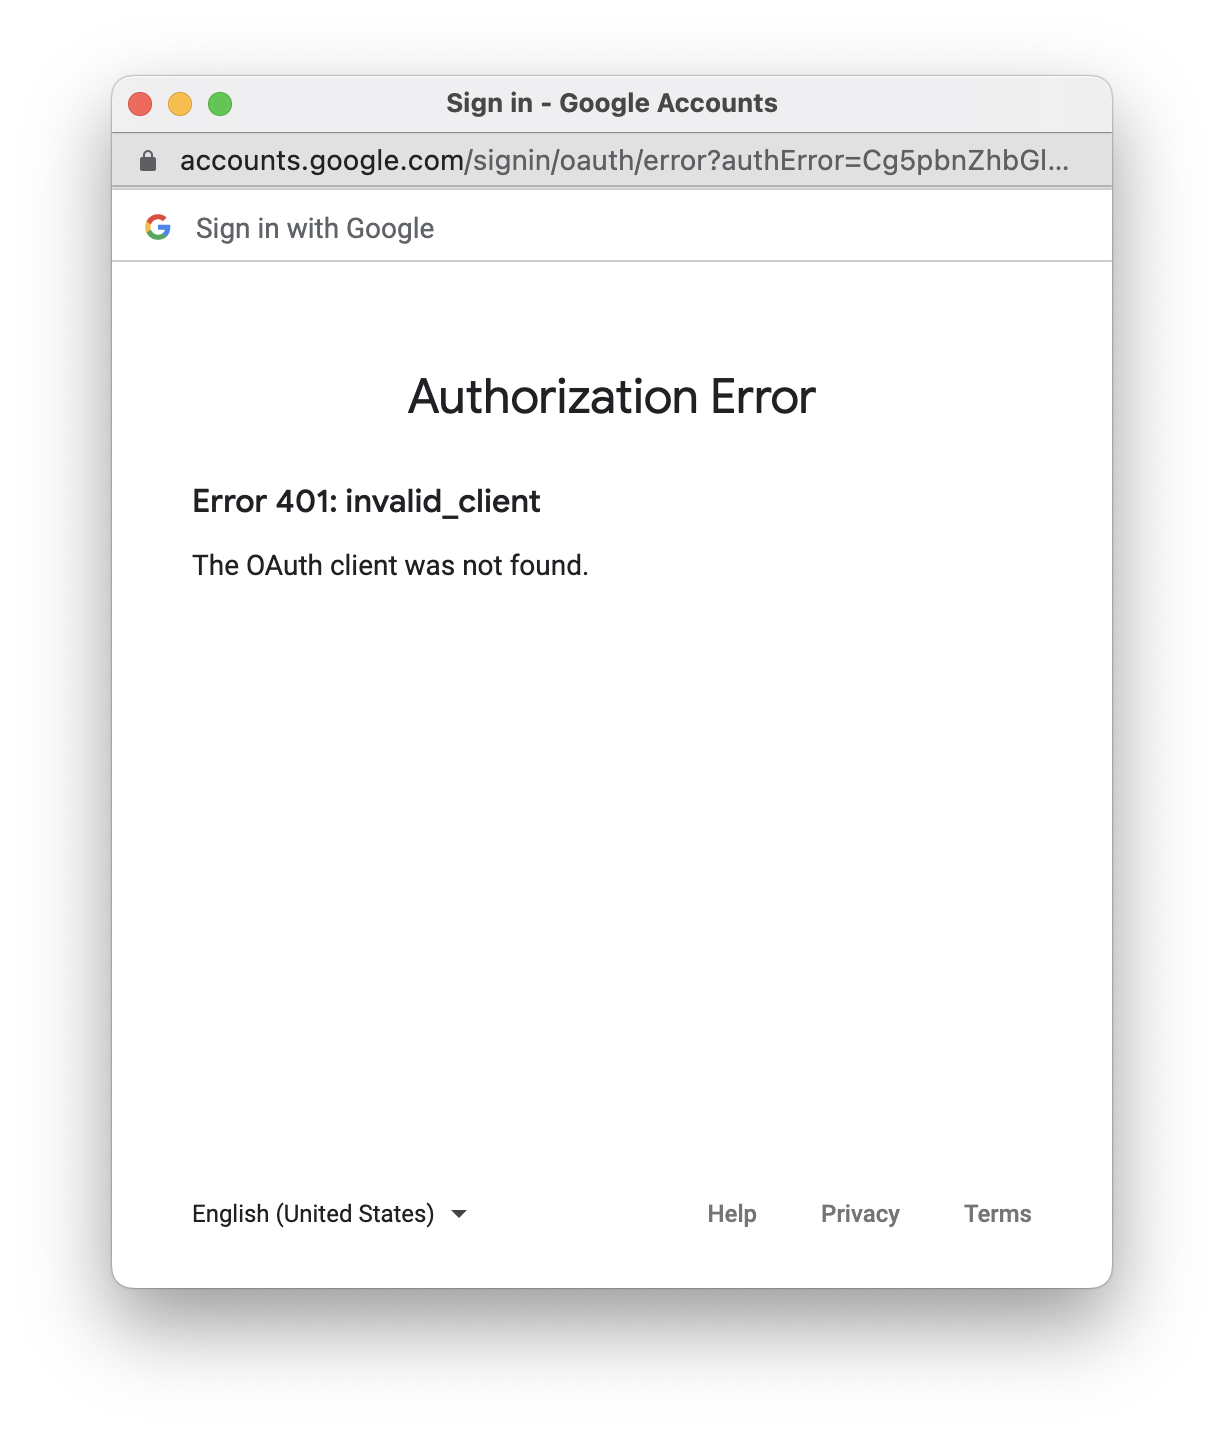 Handle API errors, Google Calendar